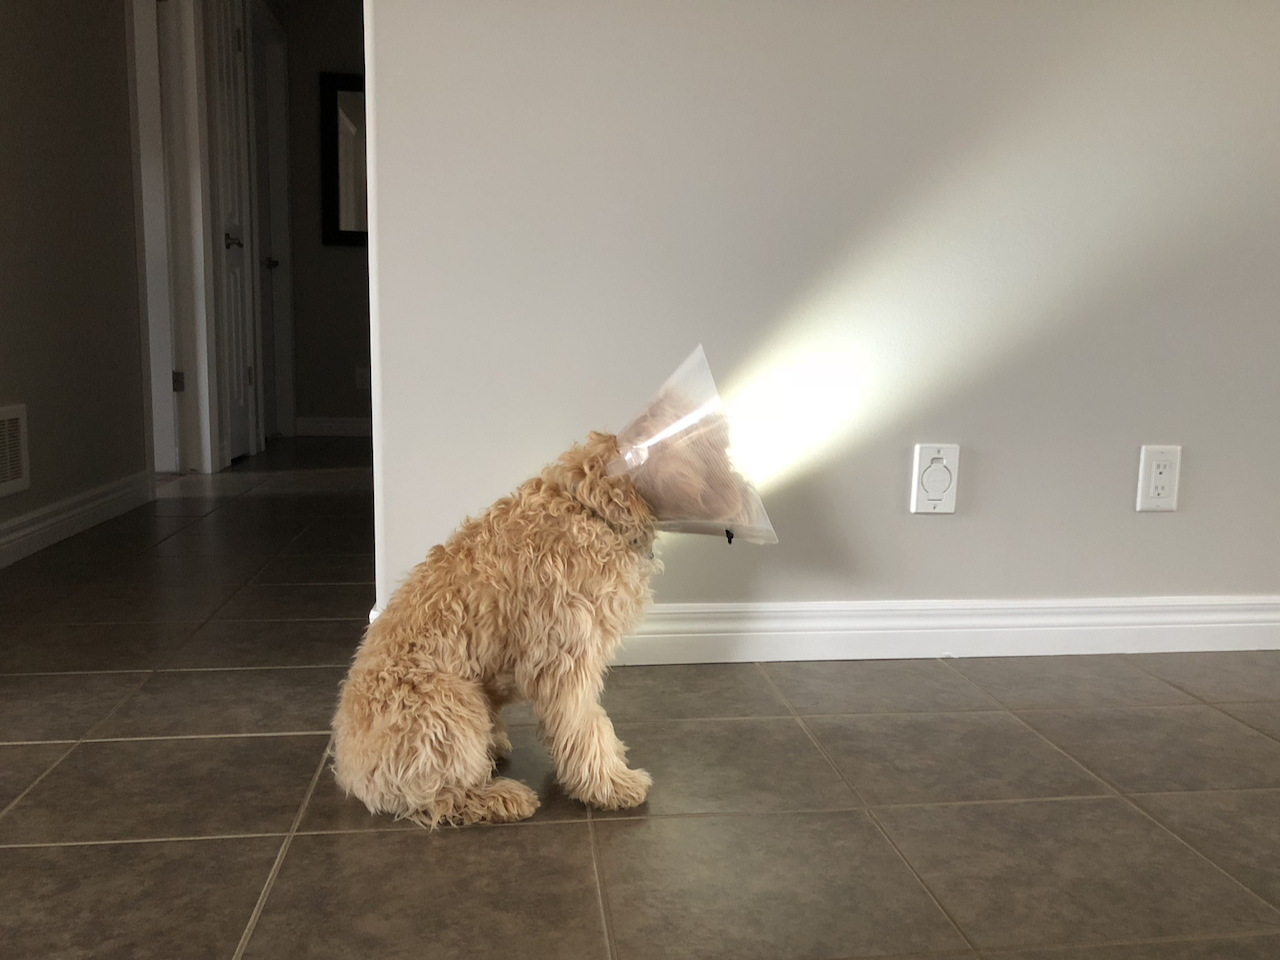 My dog looks like a lamp